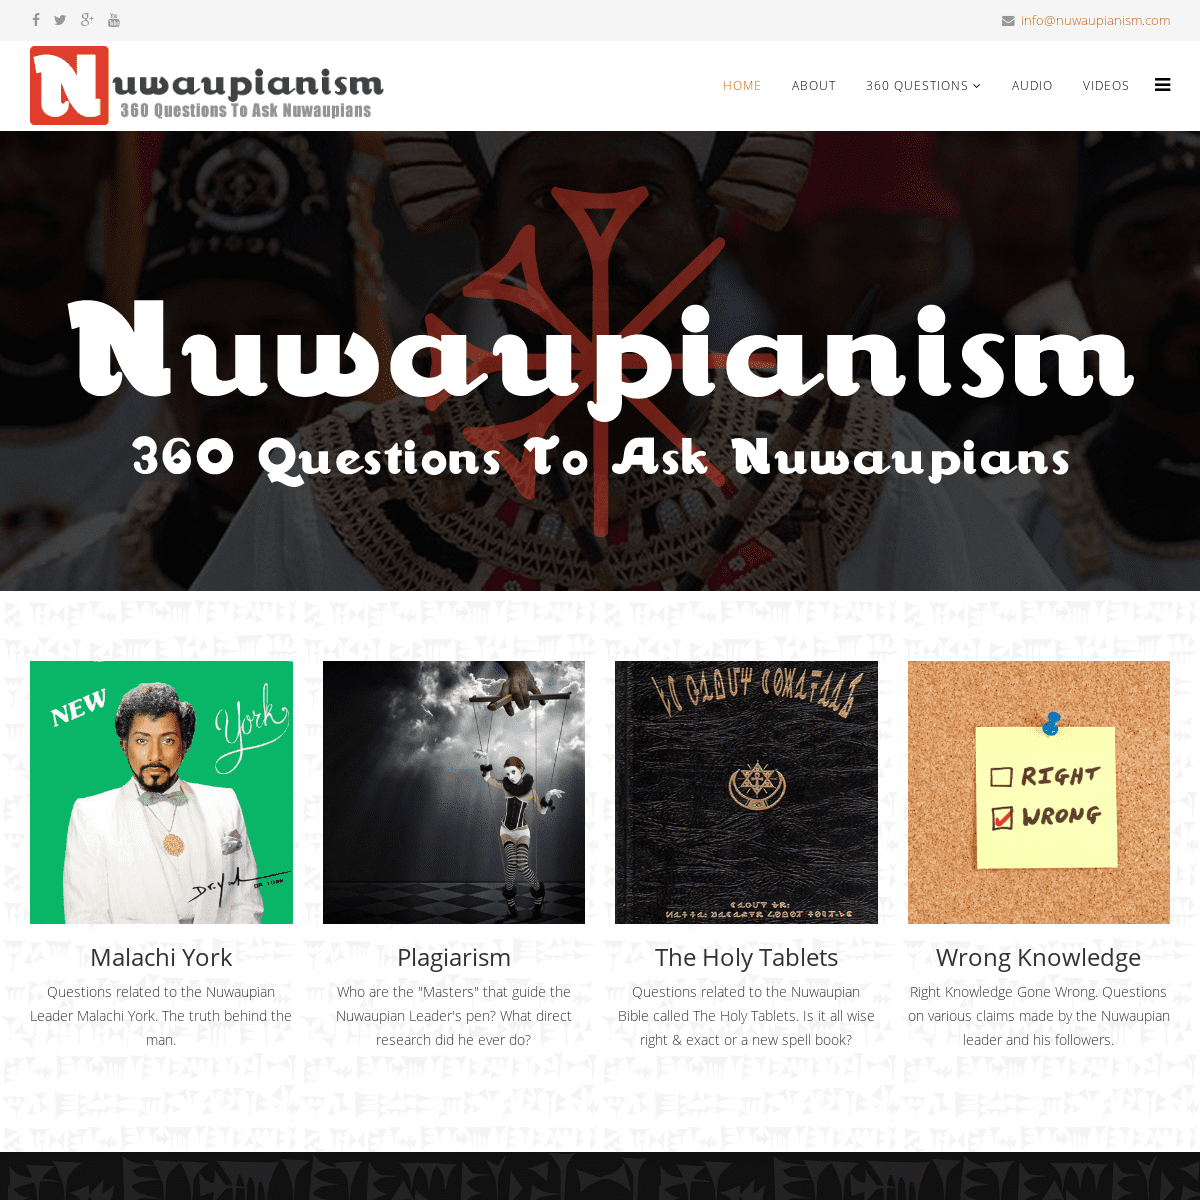 A complete backup of nuwaupianism.com